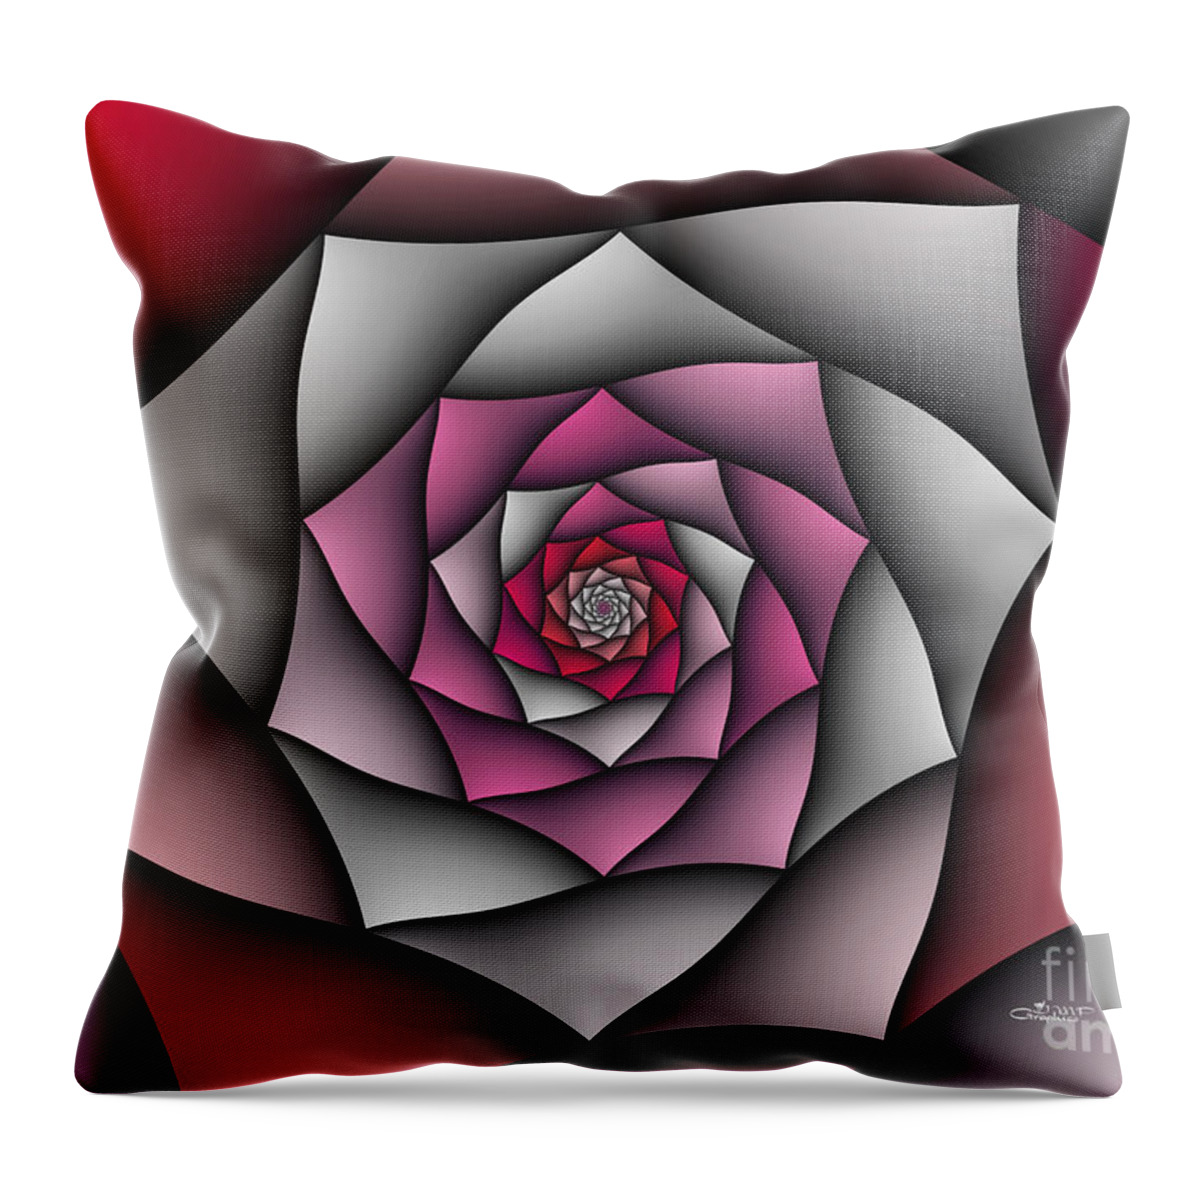 Fractal Throw Pillow featuring the digital art Mystic Flower by Jutta Maria Pusl